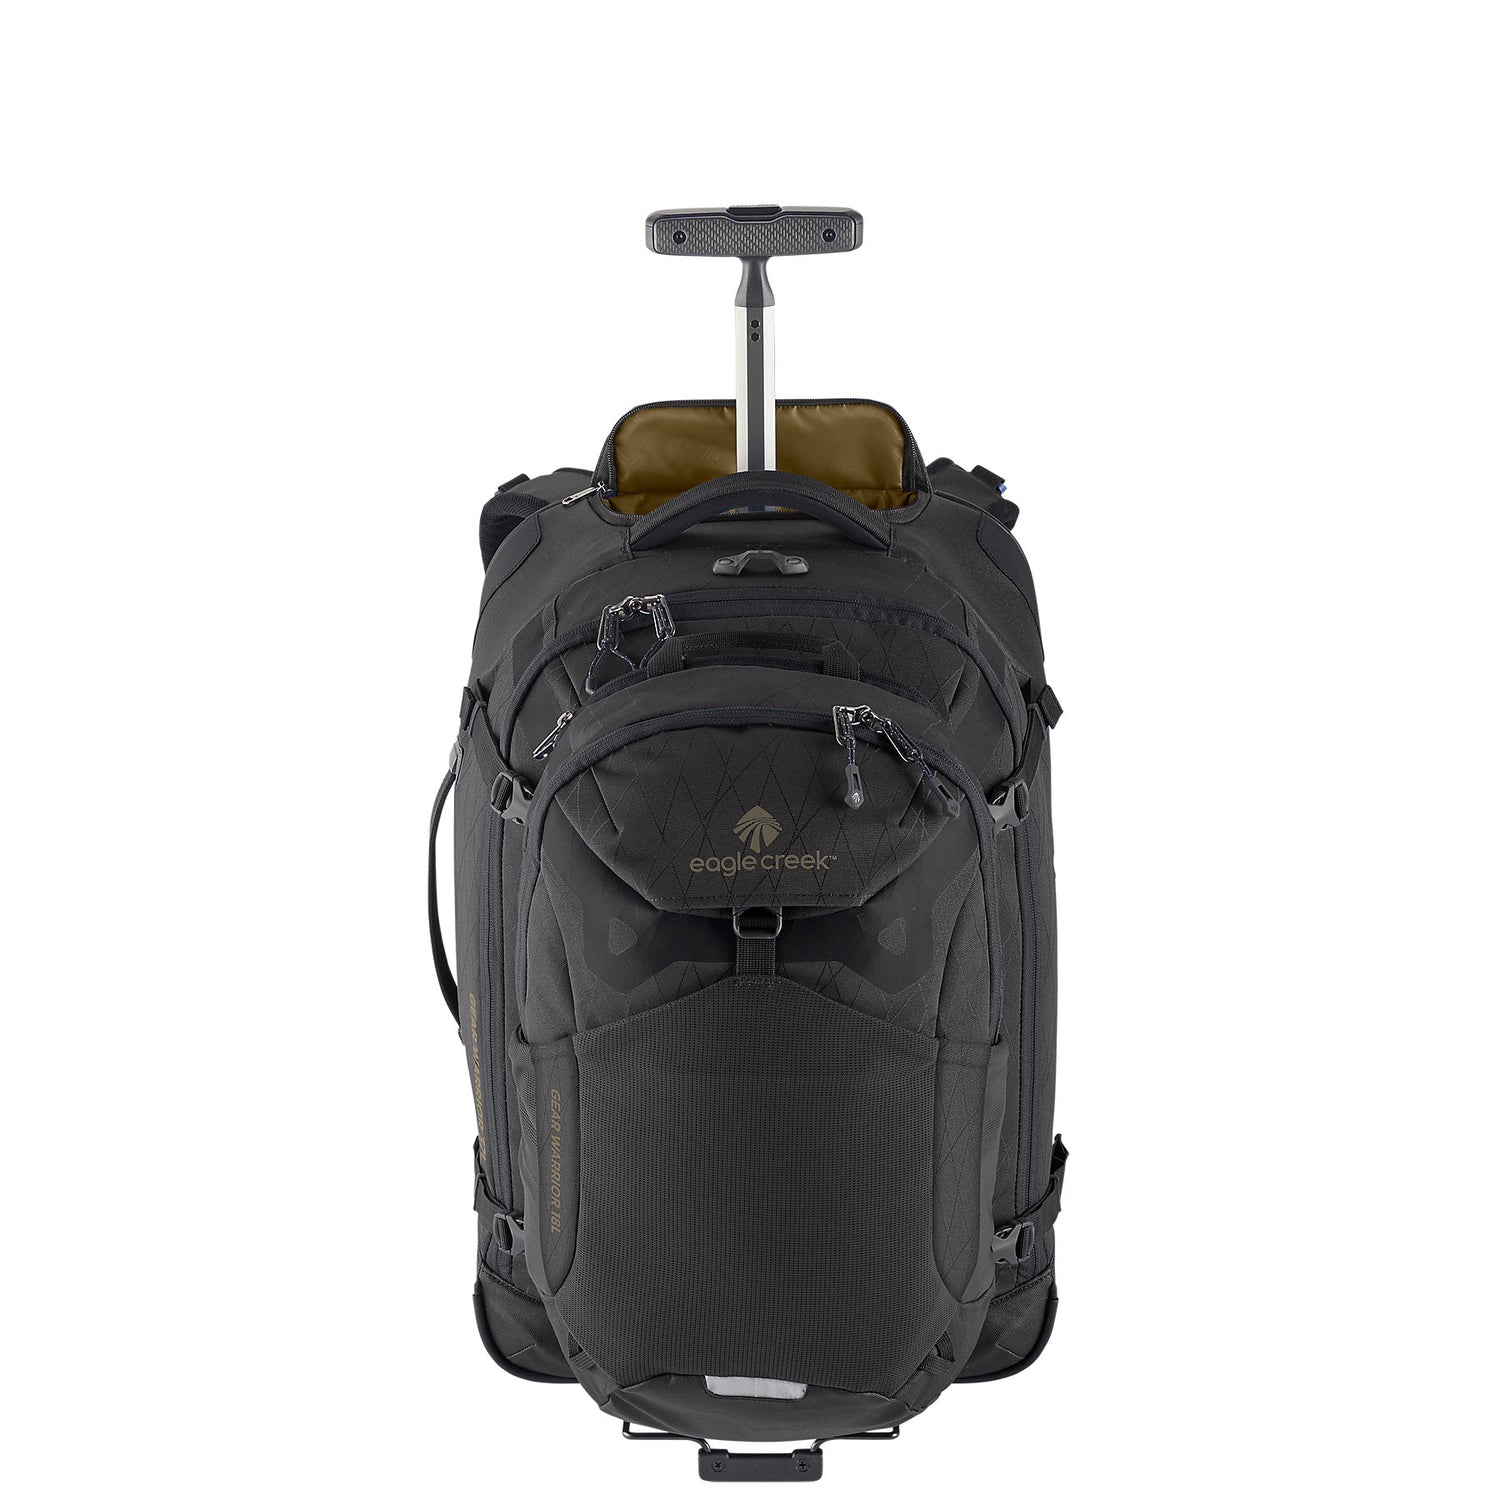 Drank Boren bouwen Carry On Backpack: Convertible Travel Bag | Eagle Creek